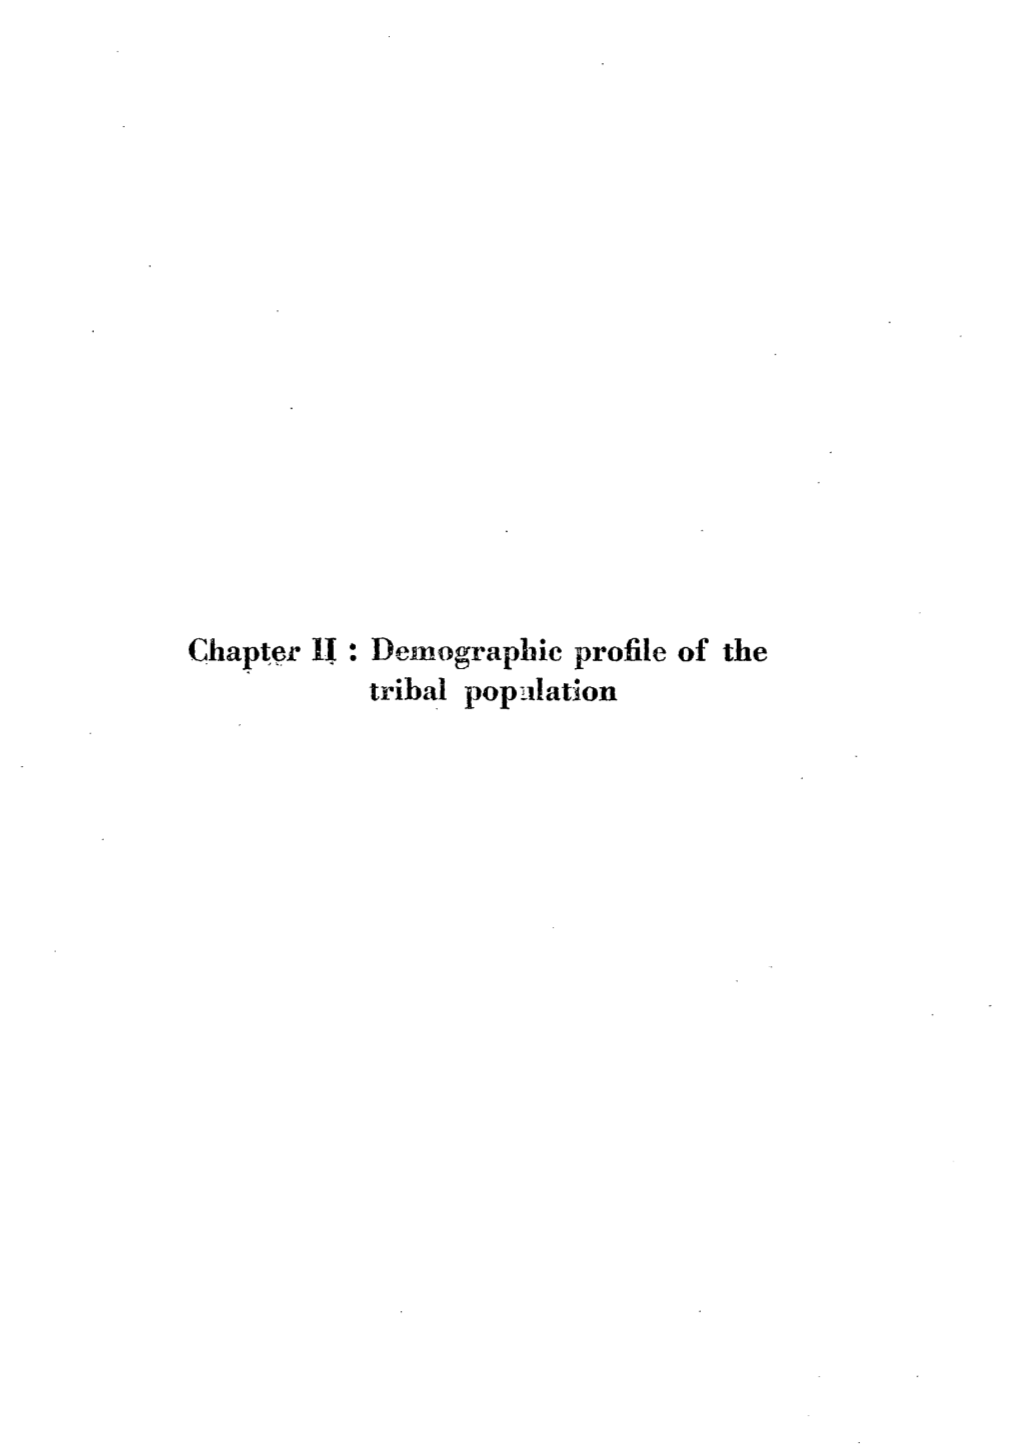 Chap~~R Ll : Detnograpl1ic Profile of the Tribal Popltlation --- 71